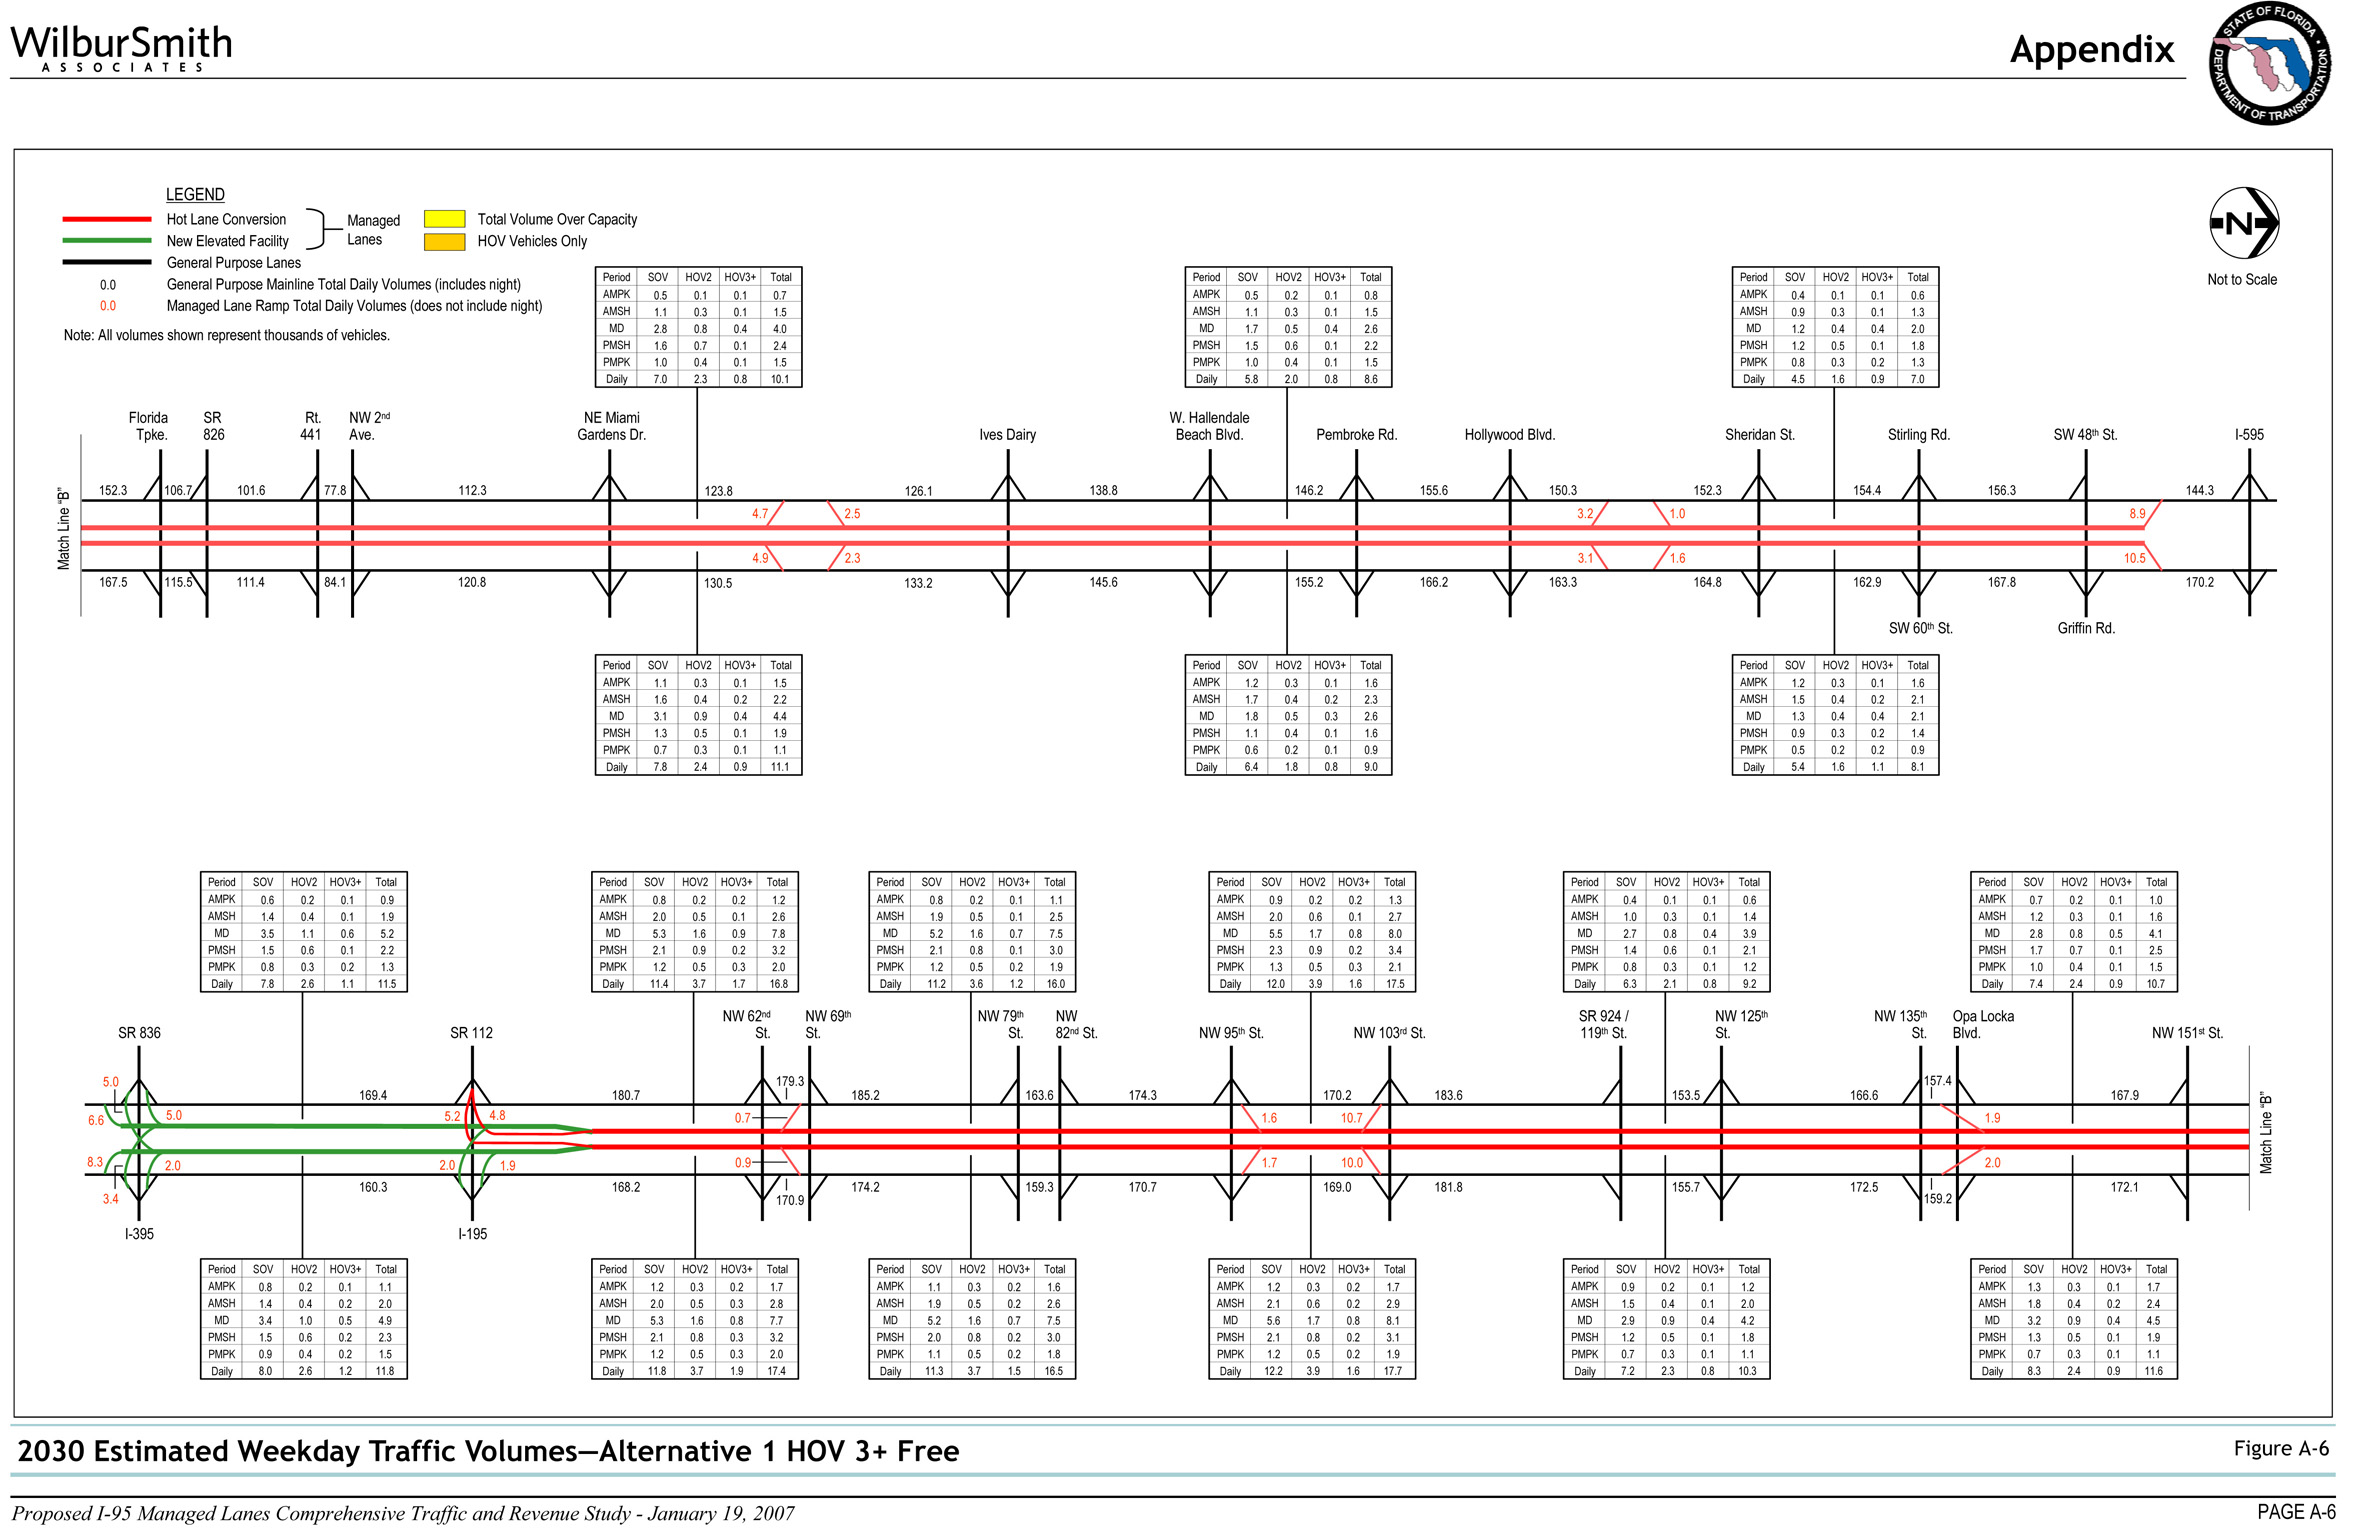 Figure A-6 2030 Estimated Weekday Traffic Volumes - Alternative 1 HOV 3+ Free